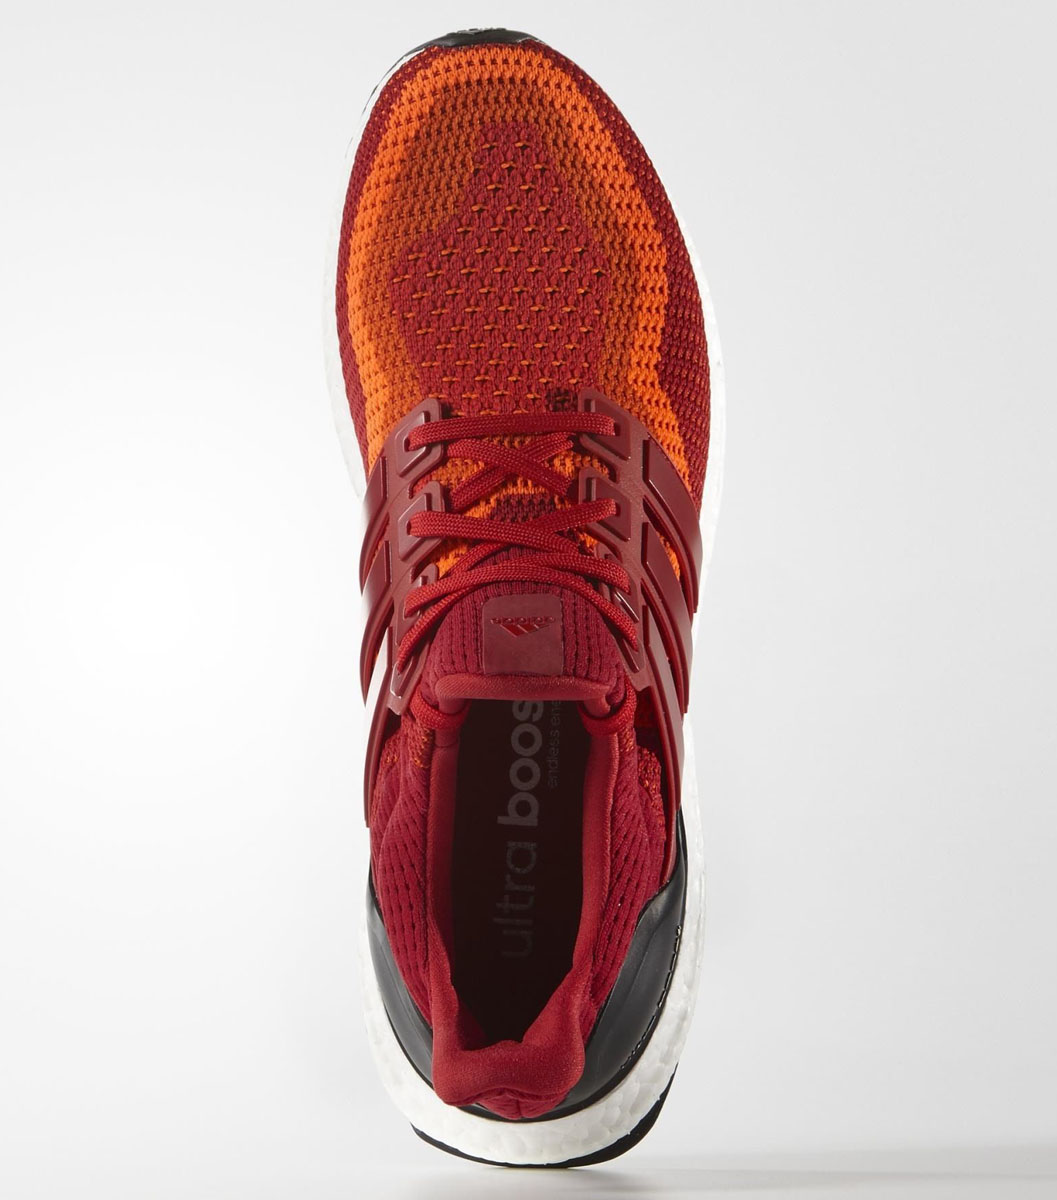 adidas Ultra Boost 2016 Red/Orange (2)